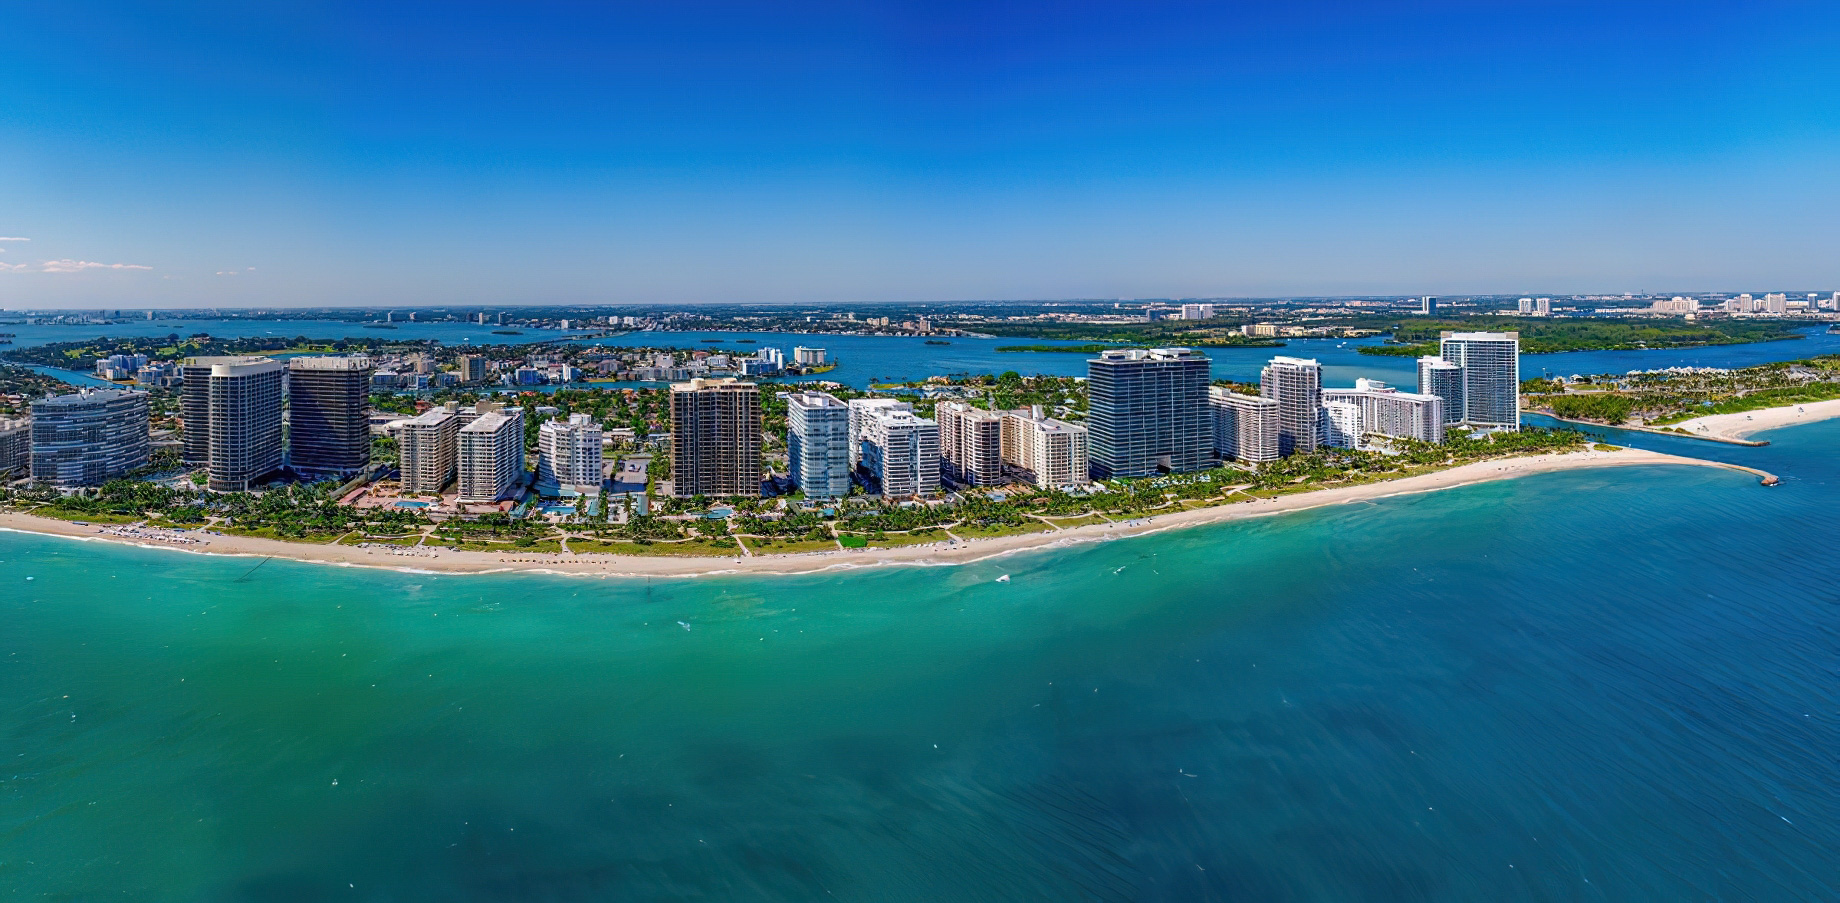 The Ritz-Carlton Bal Harbour, Miami Resort - Bal Harbour, FL, USA - Panorama